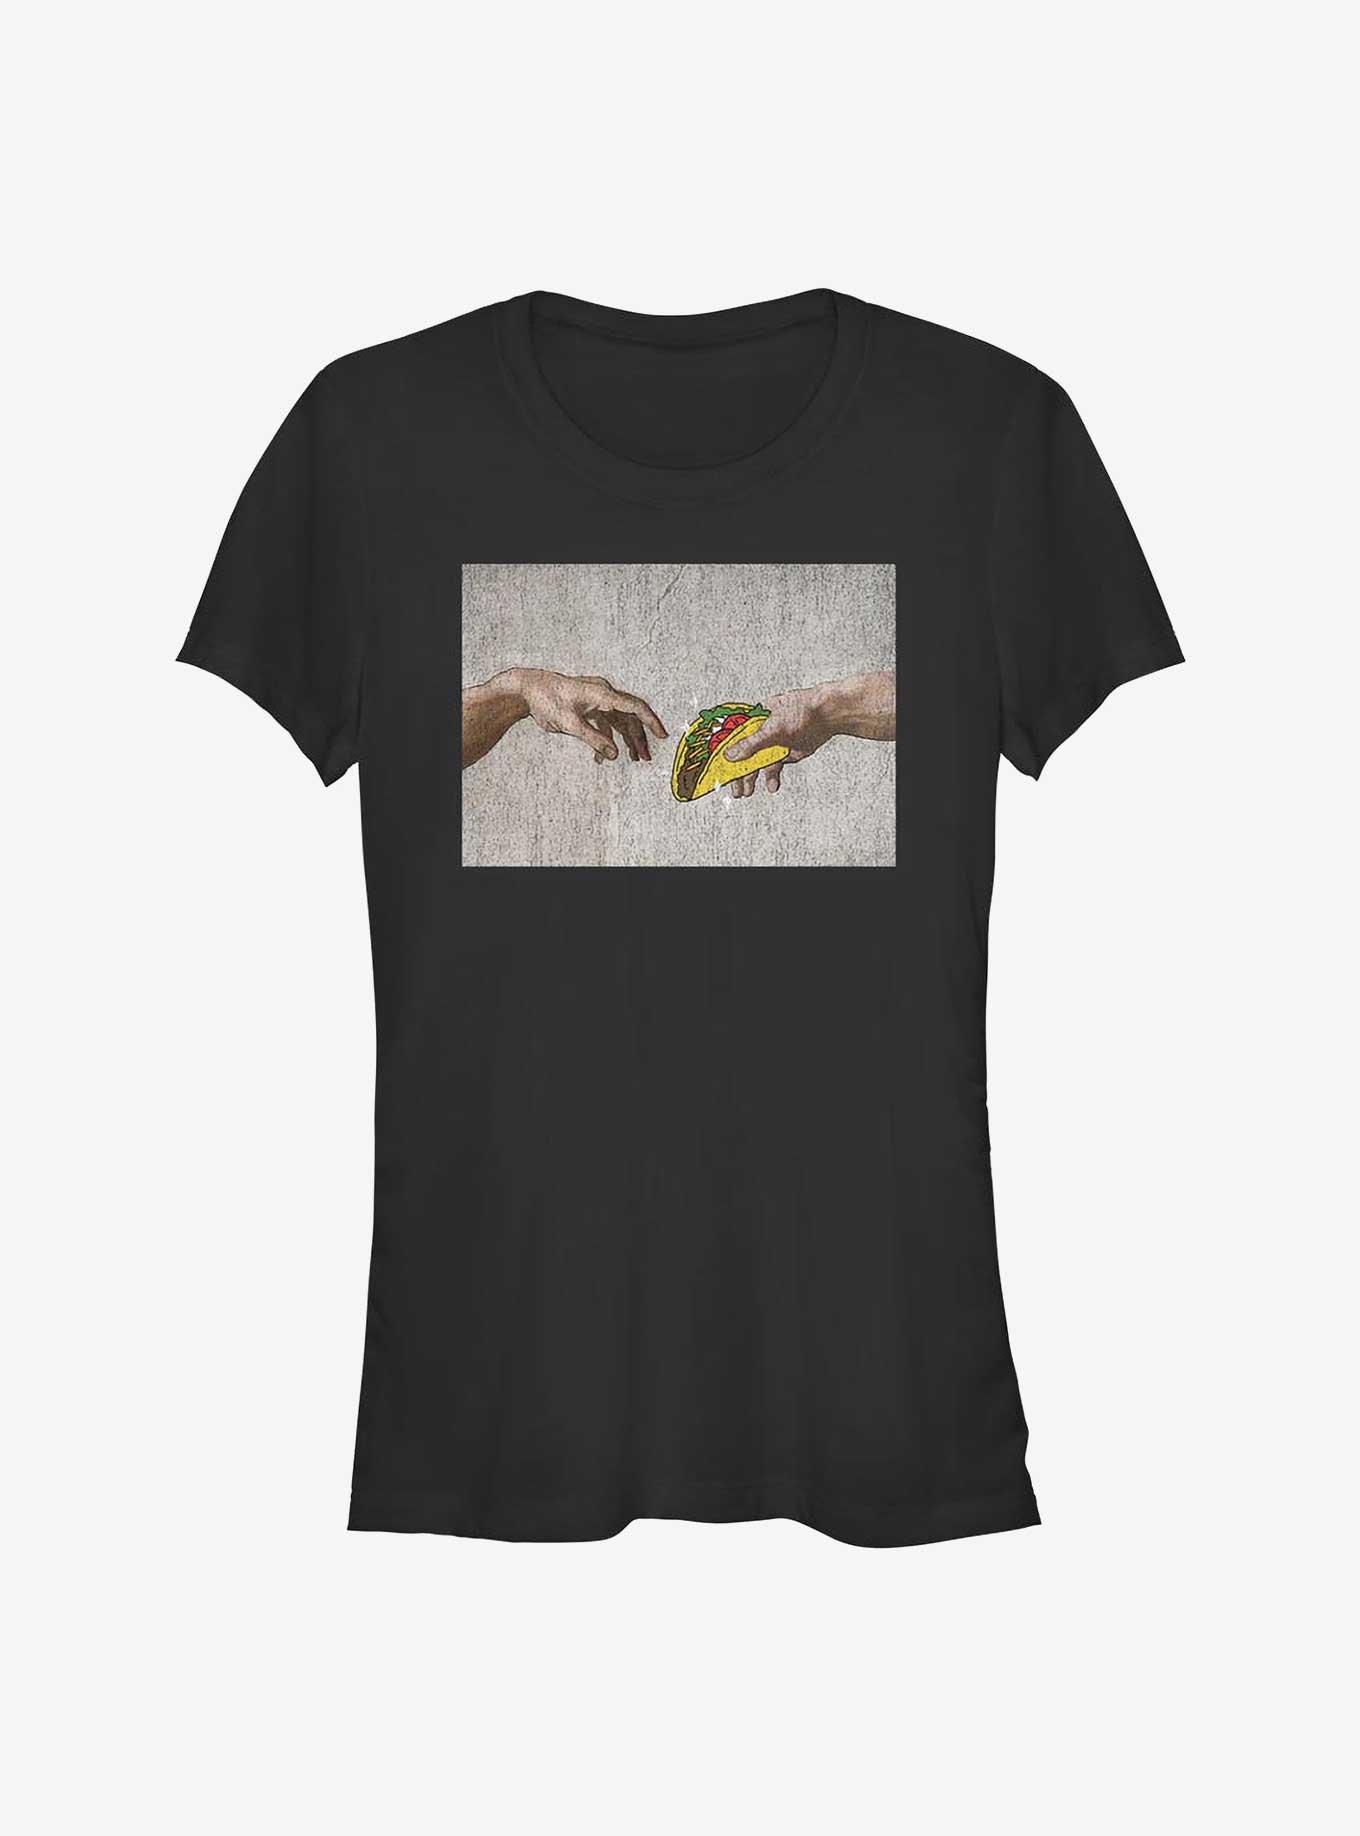 Creation Of Taco Girls T-Shirt